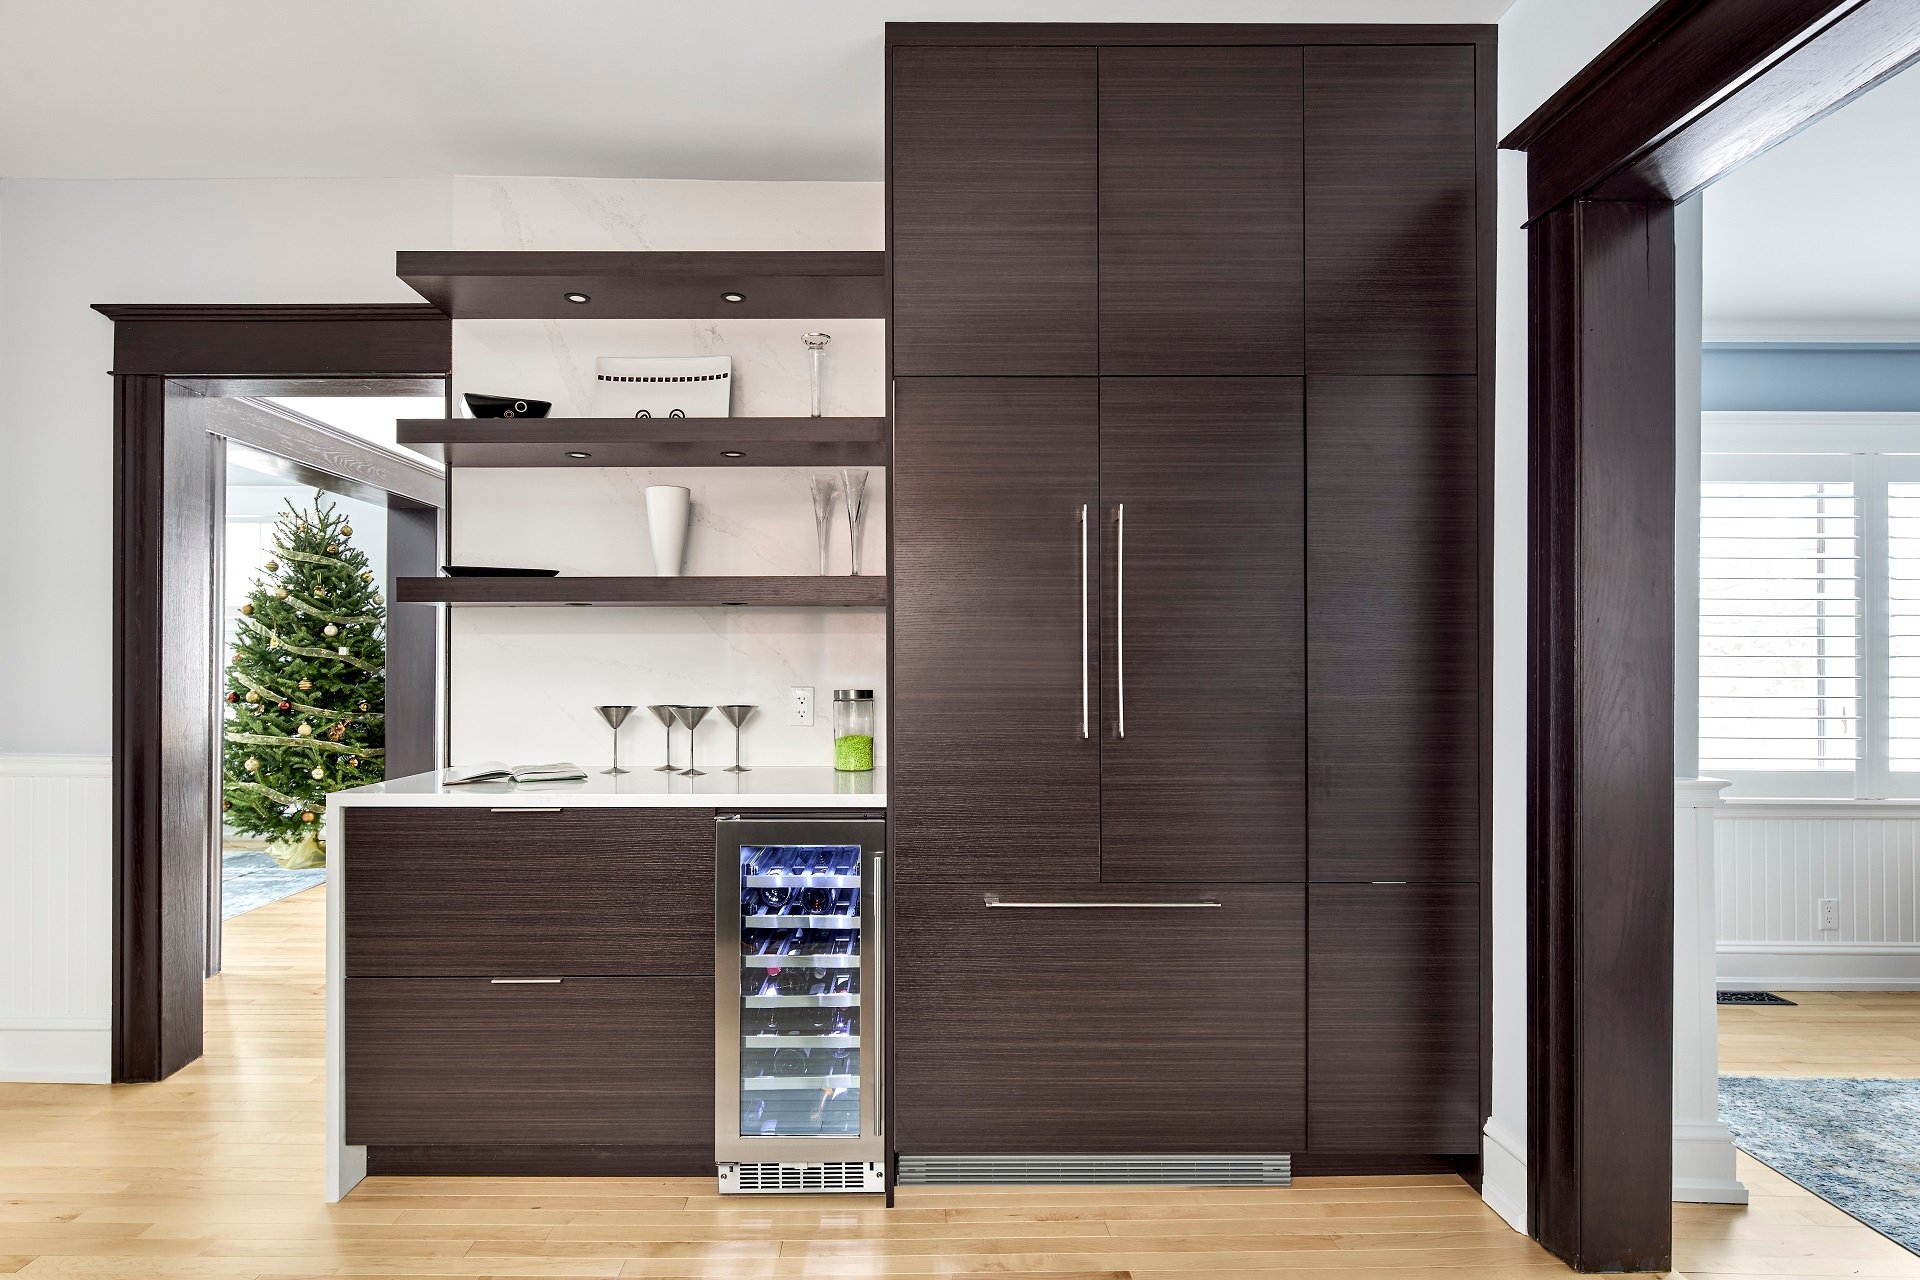 An integrated fridge in a kitchen design